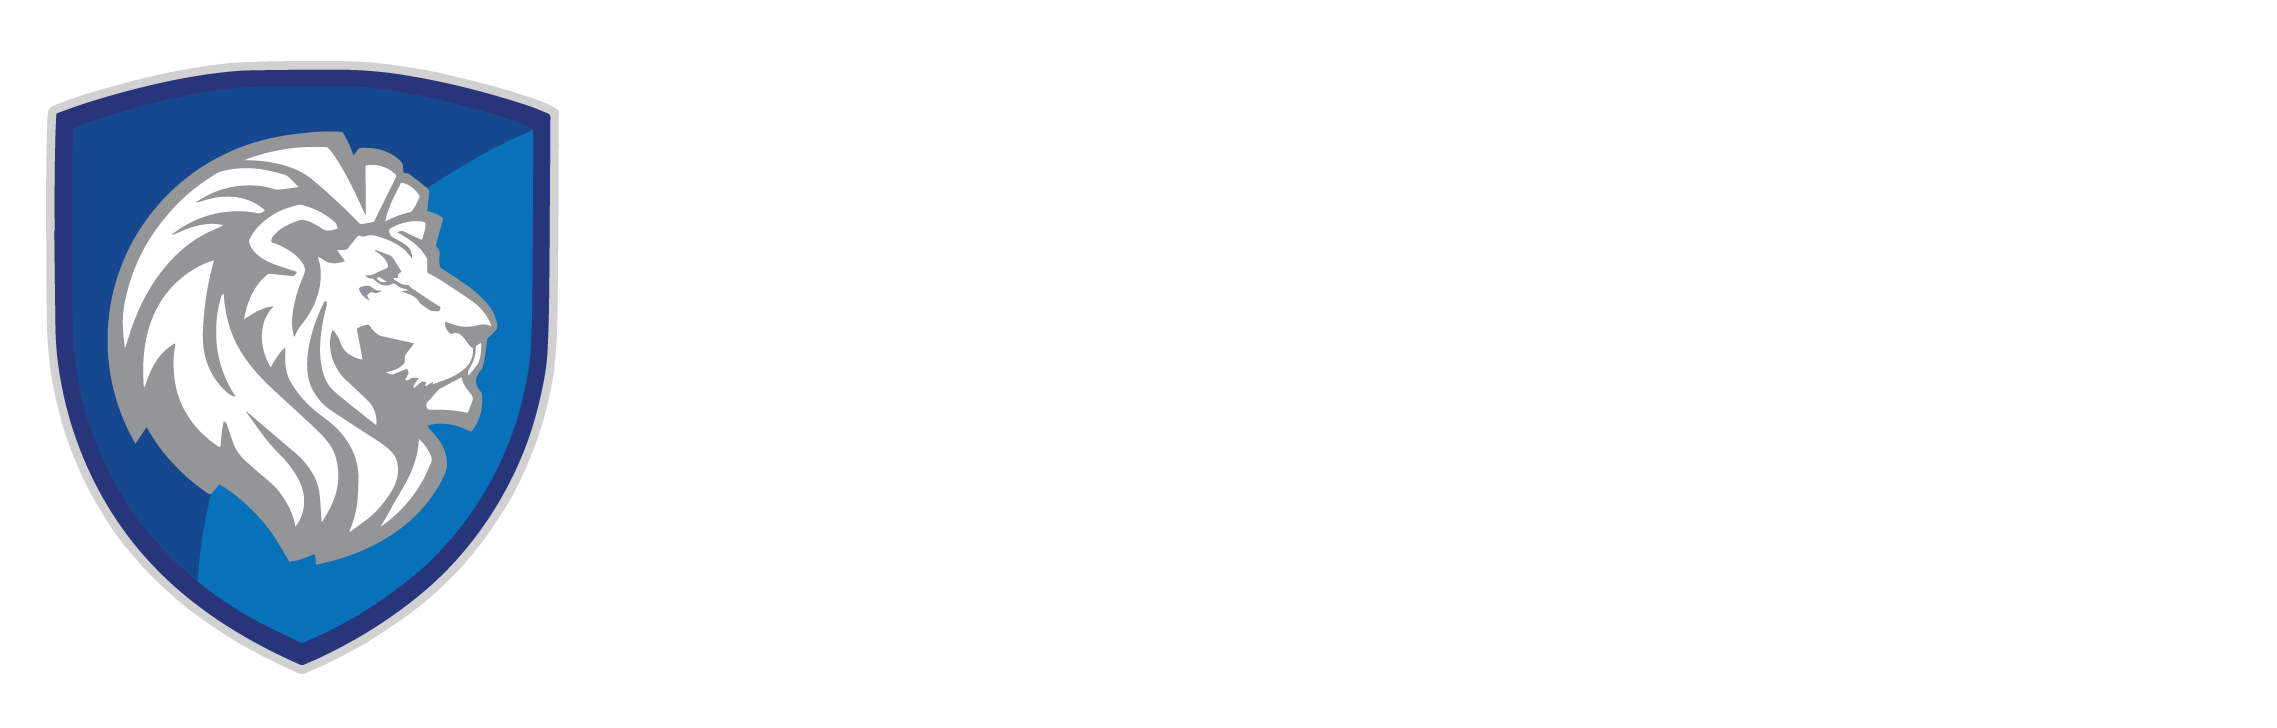 St. Jerome School